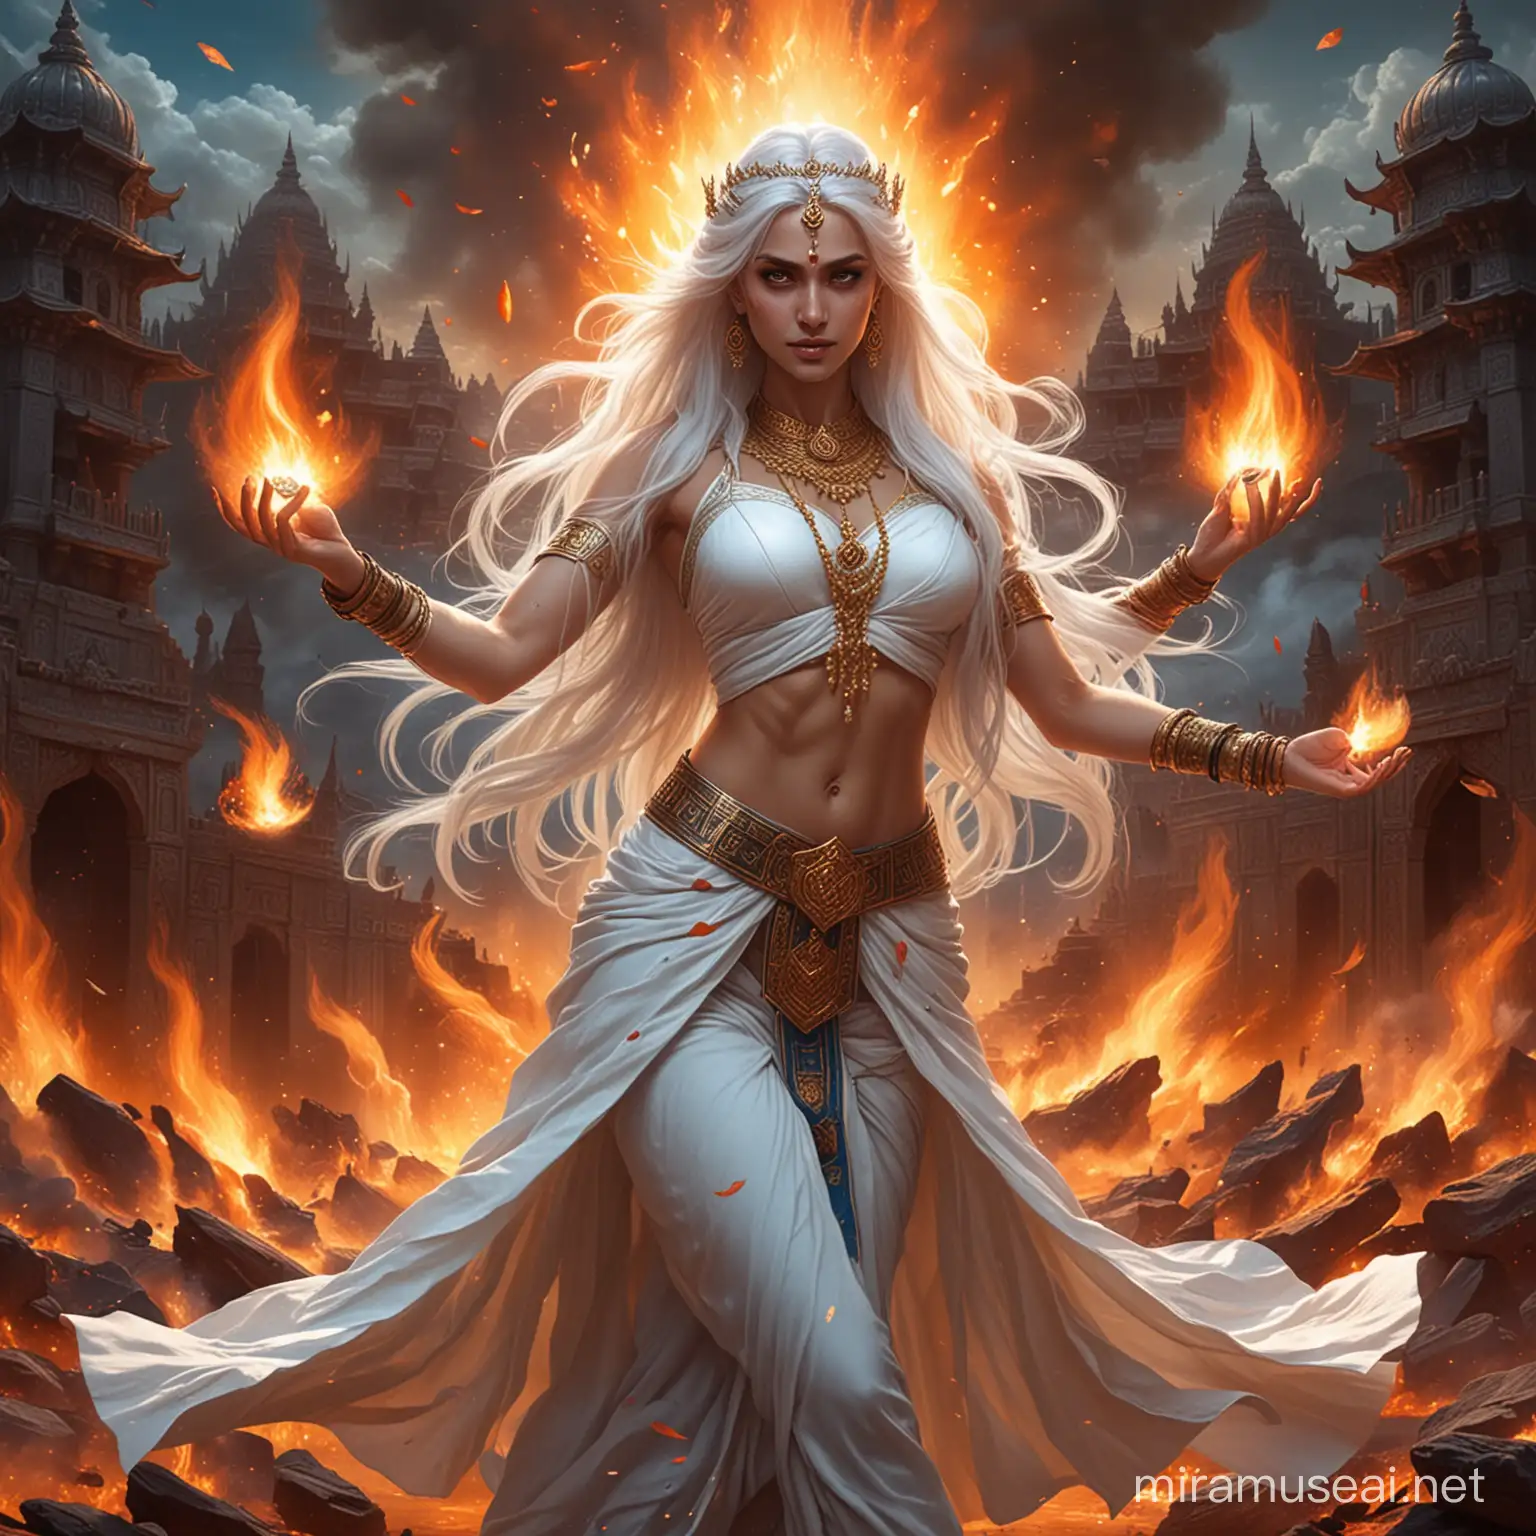 Powerful Hindu Empress Kayashiel Conjuring Flames with Demonic Deities in Fiery Combat